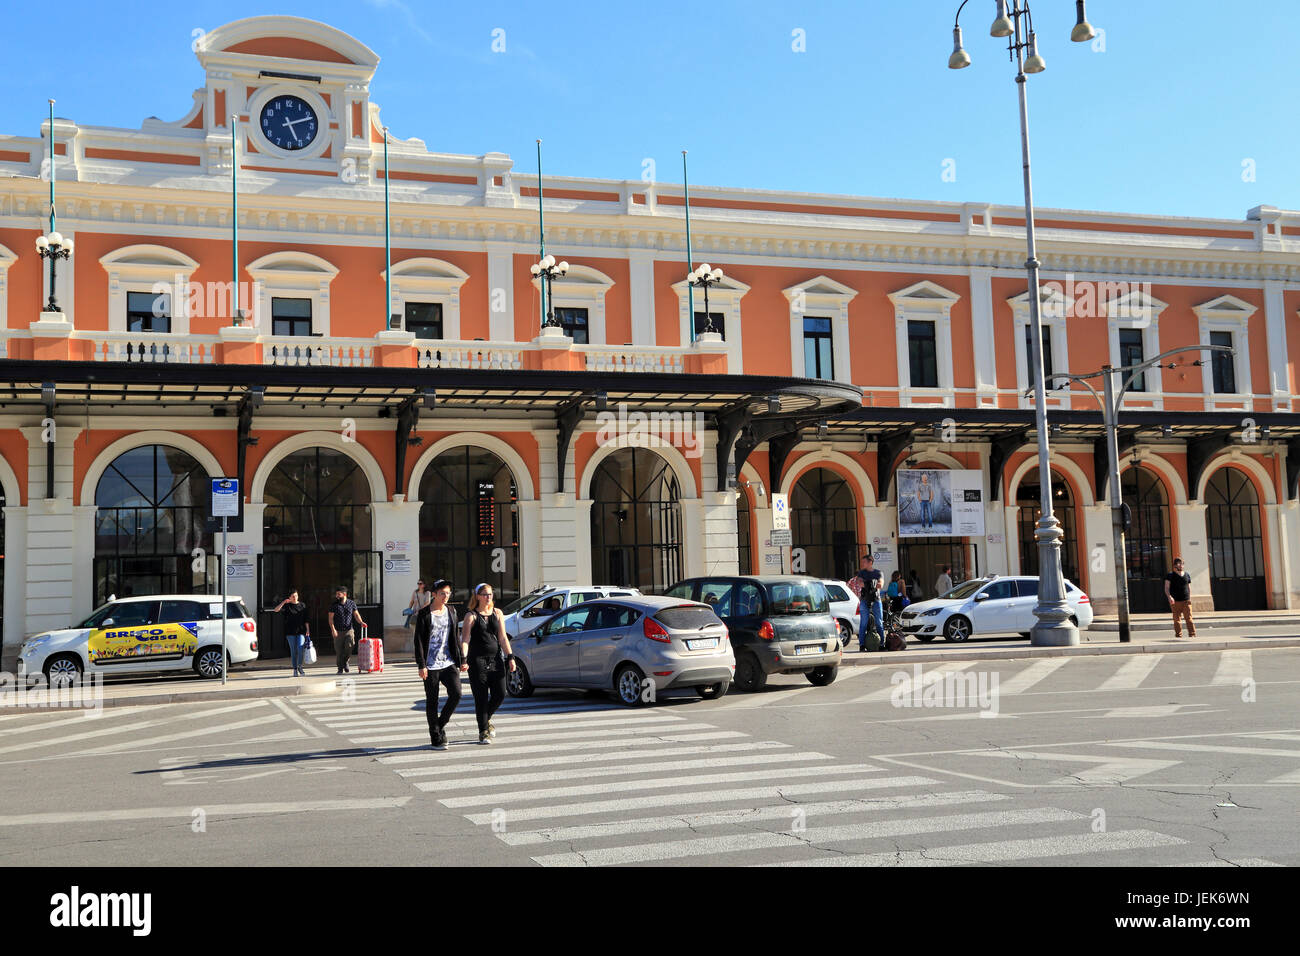 La gare de Bari, Pouilles, Italie du Sud / Puglia, Italia Banque D'Images